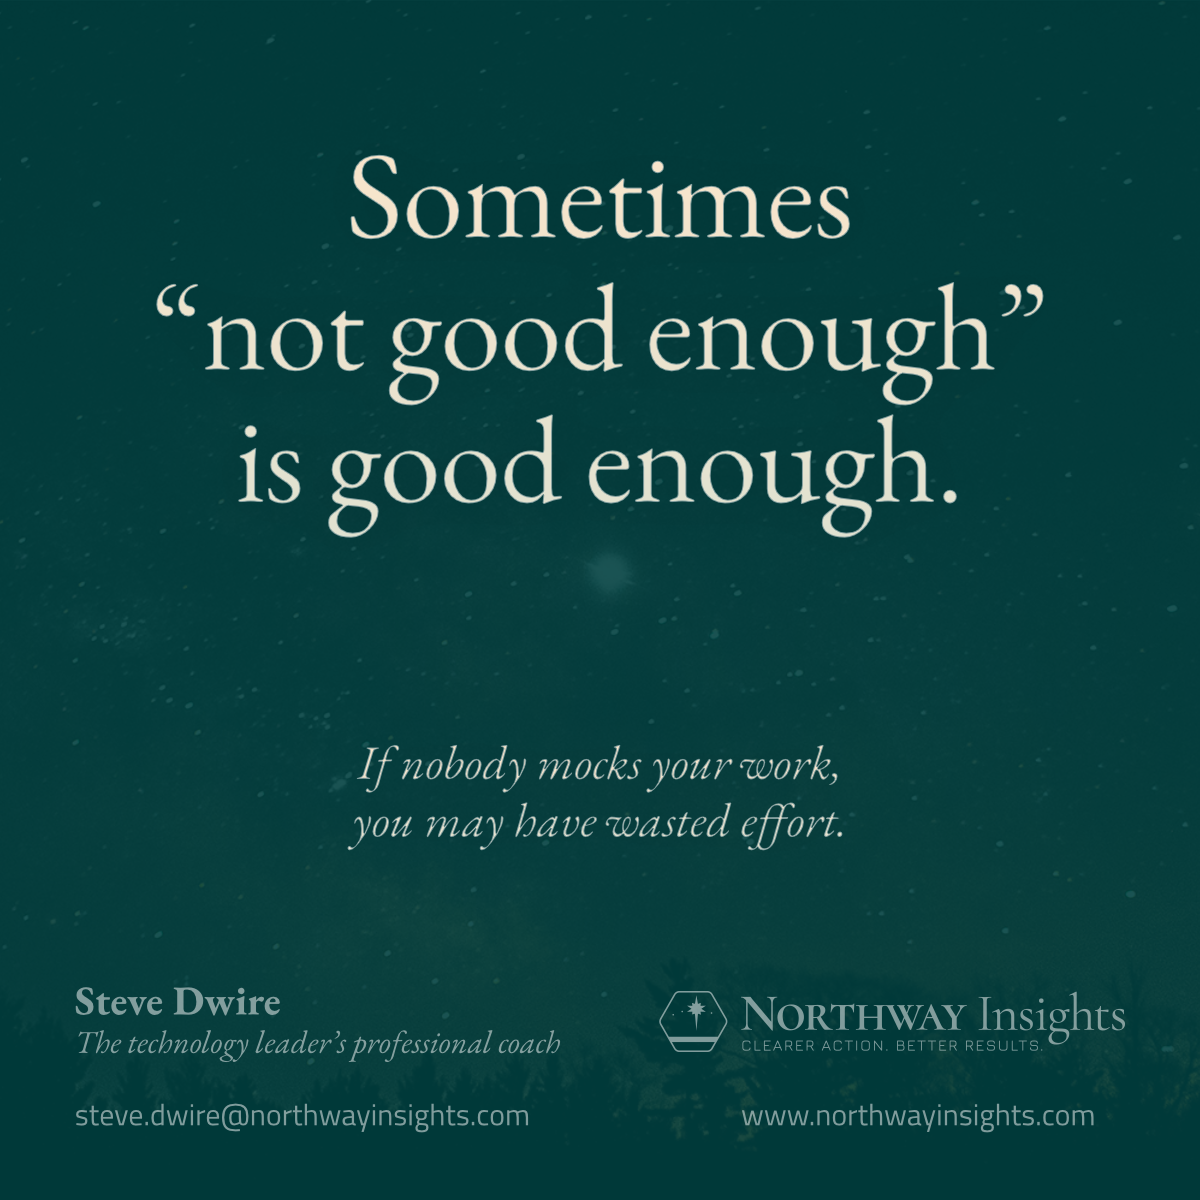 Sometimes “not good enough” is good enough